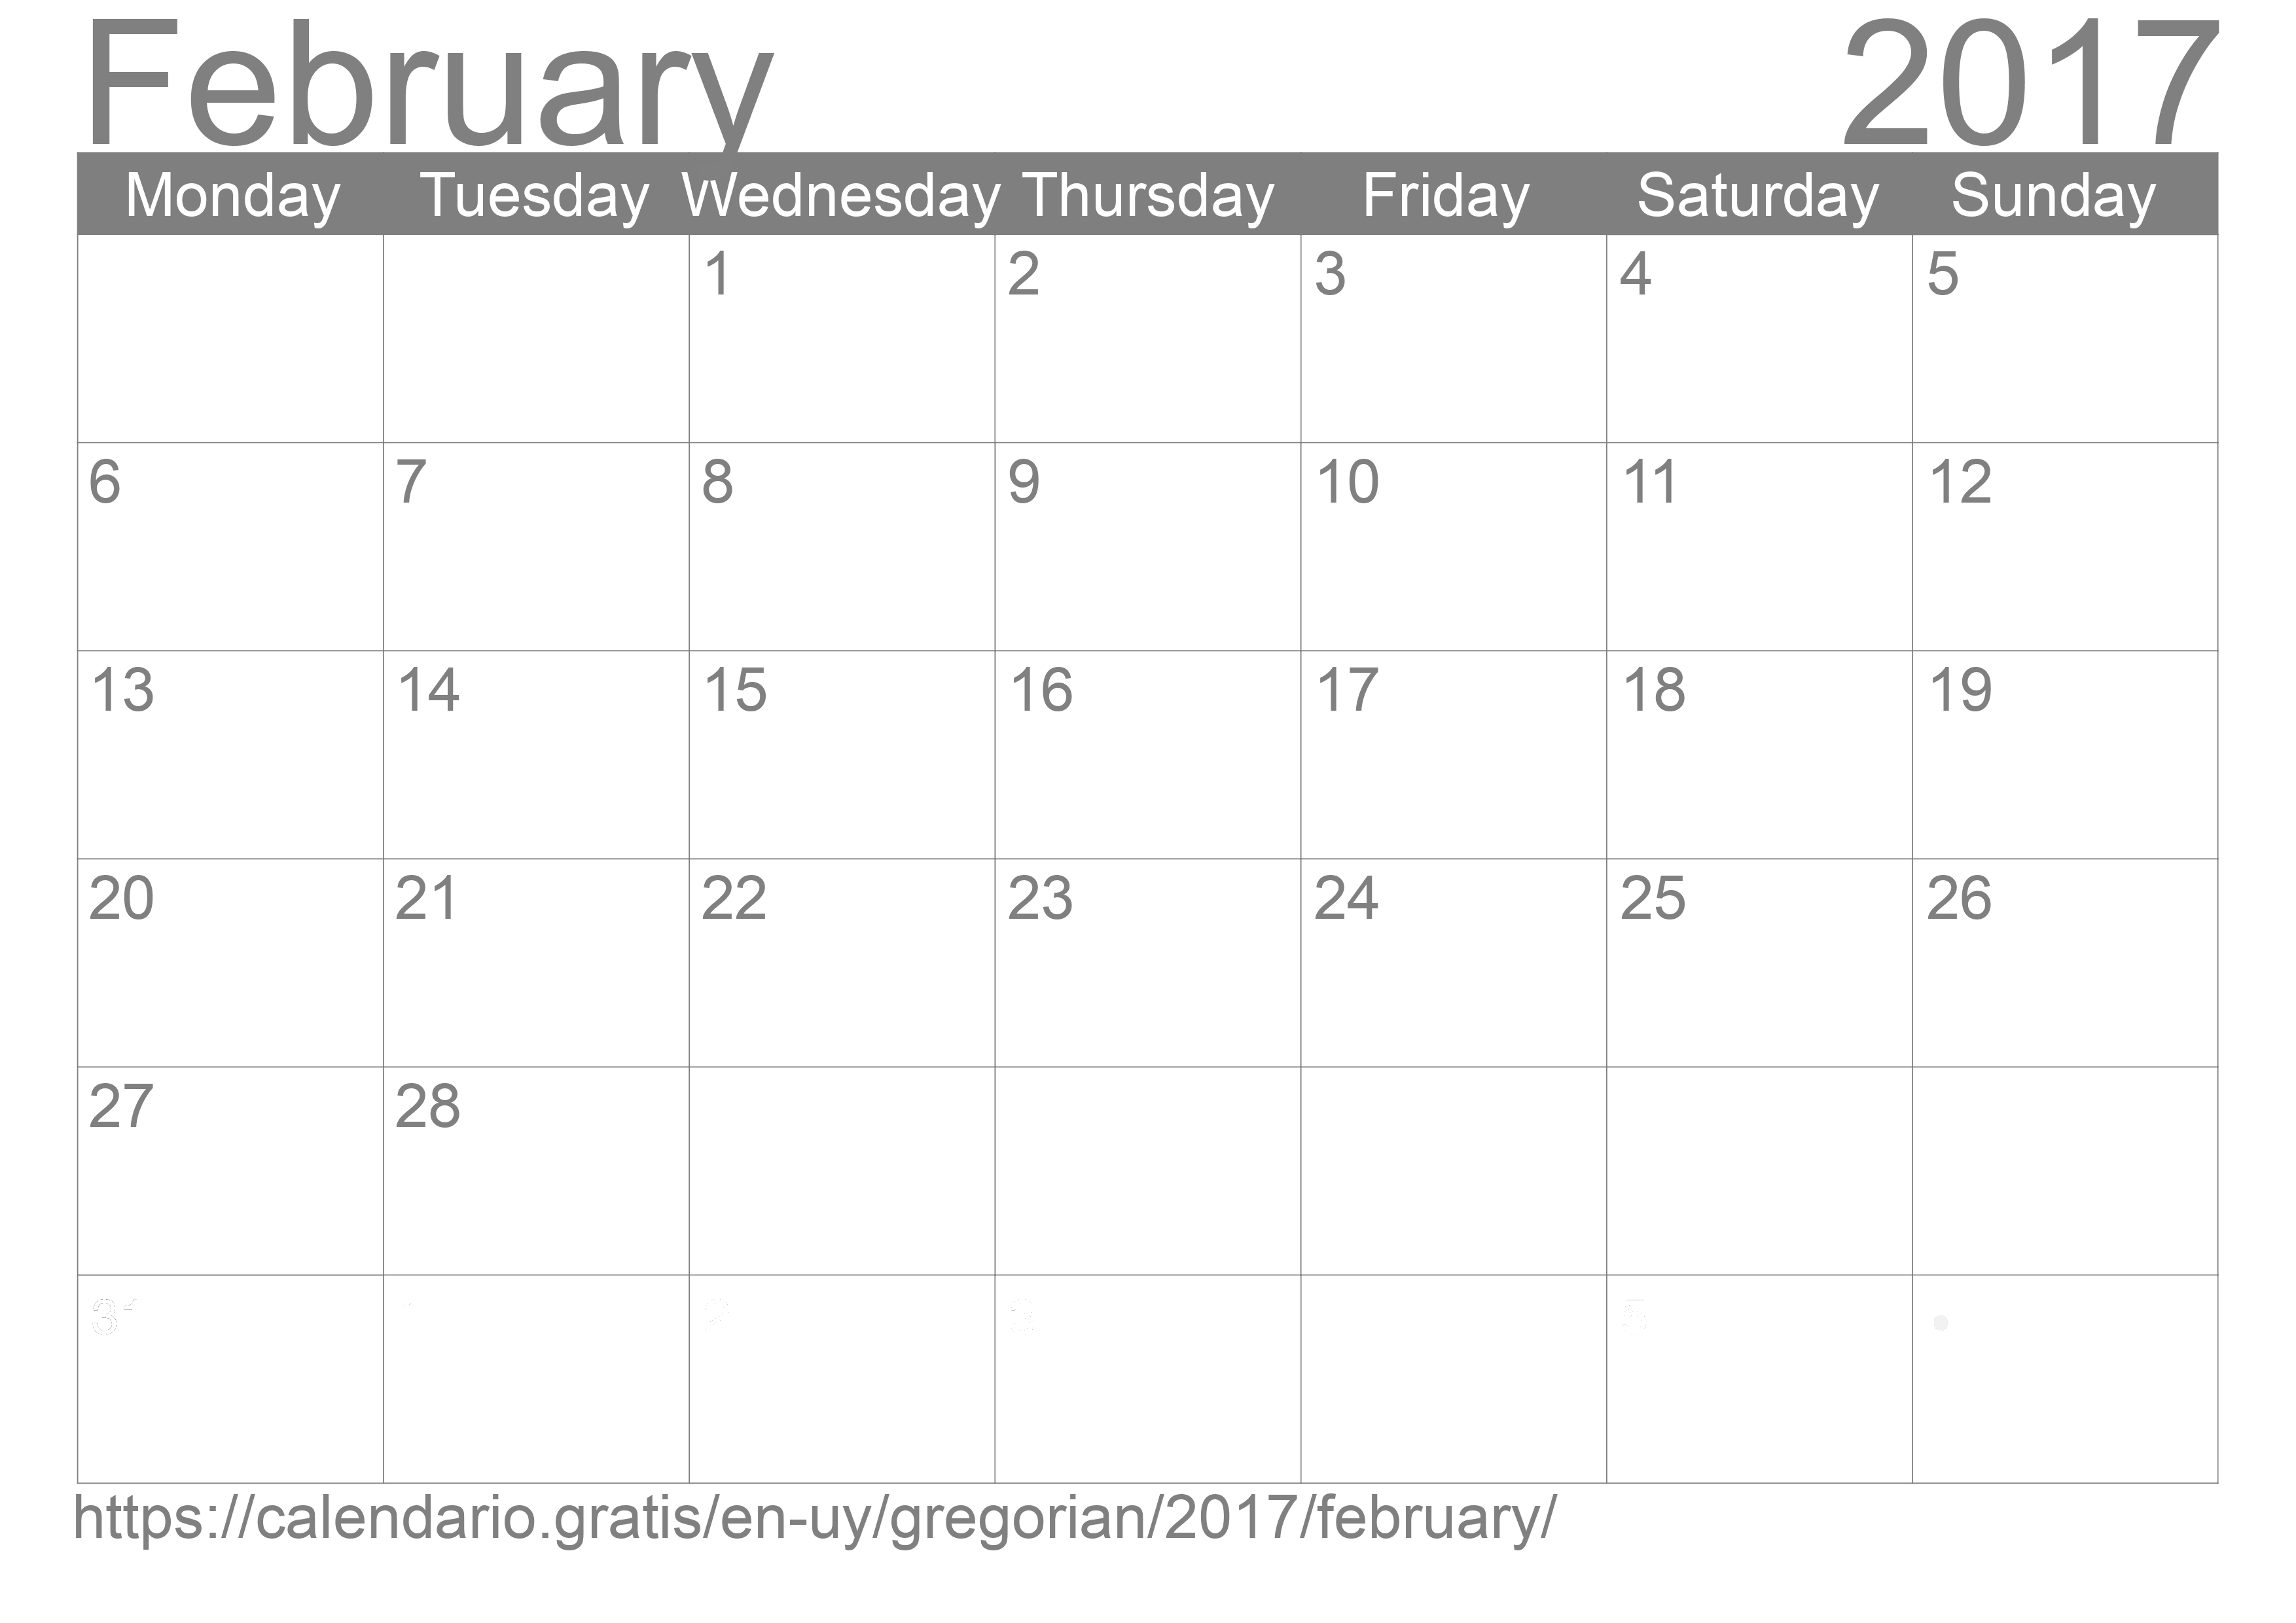 Calendar February 2017 to print